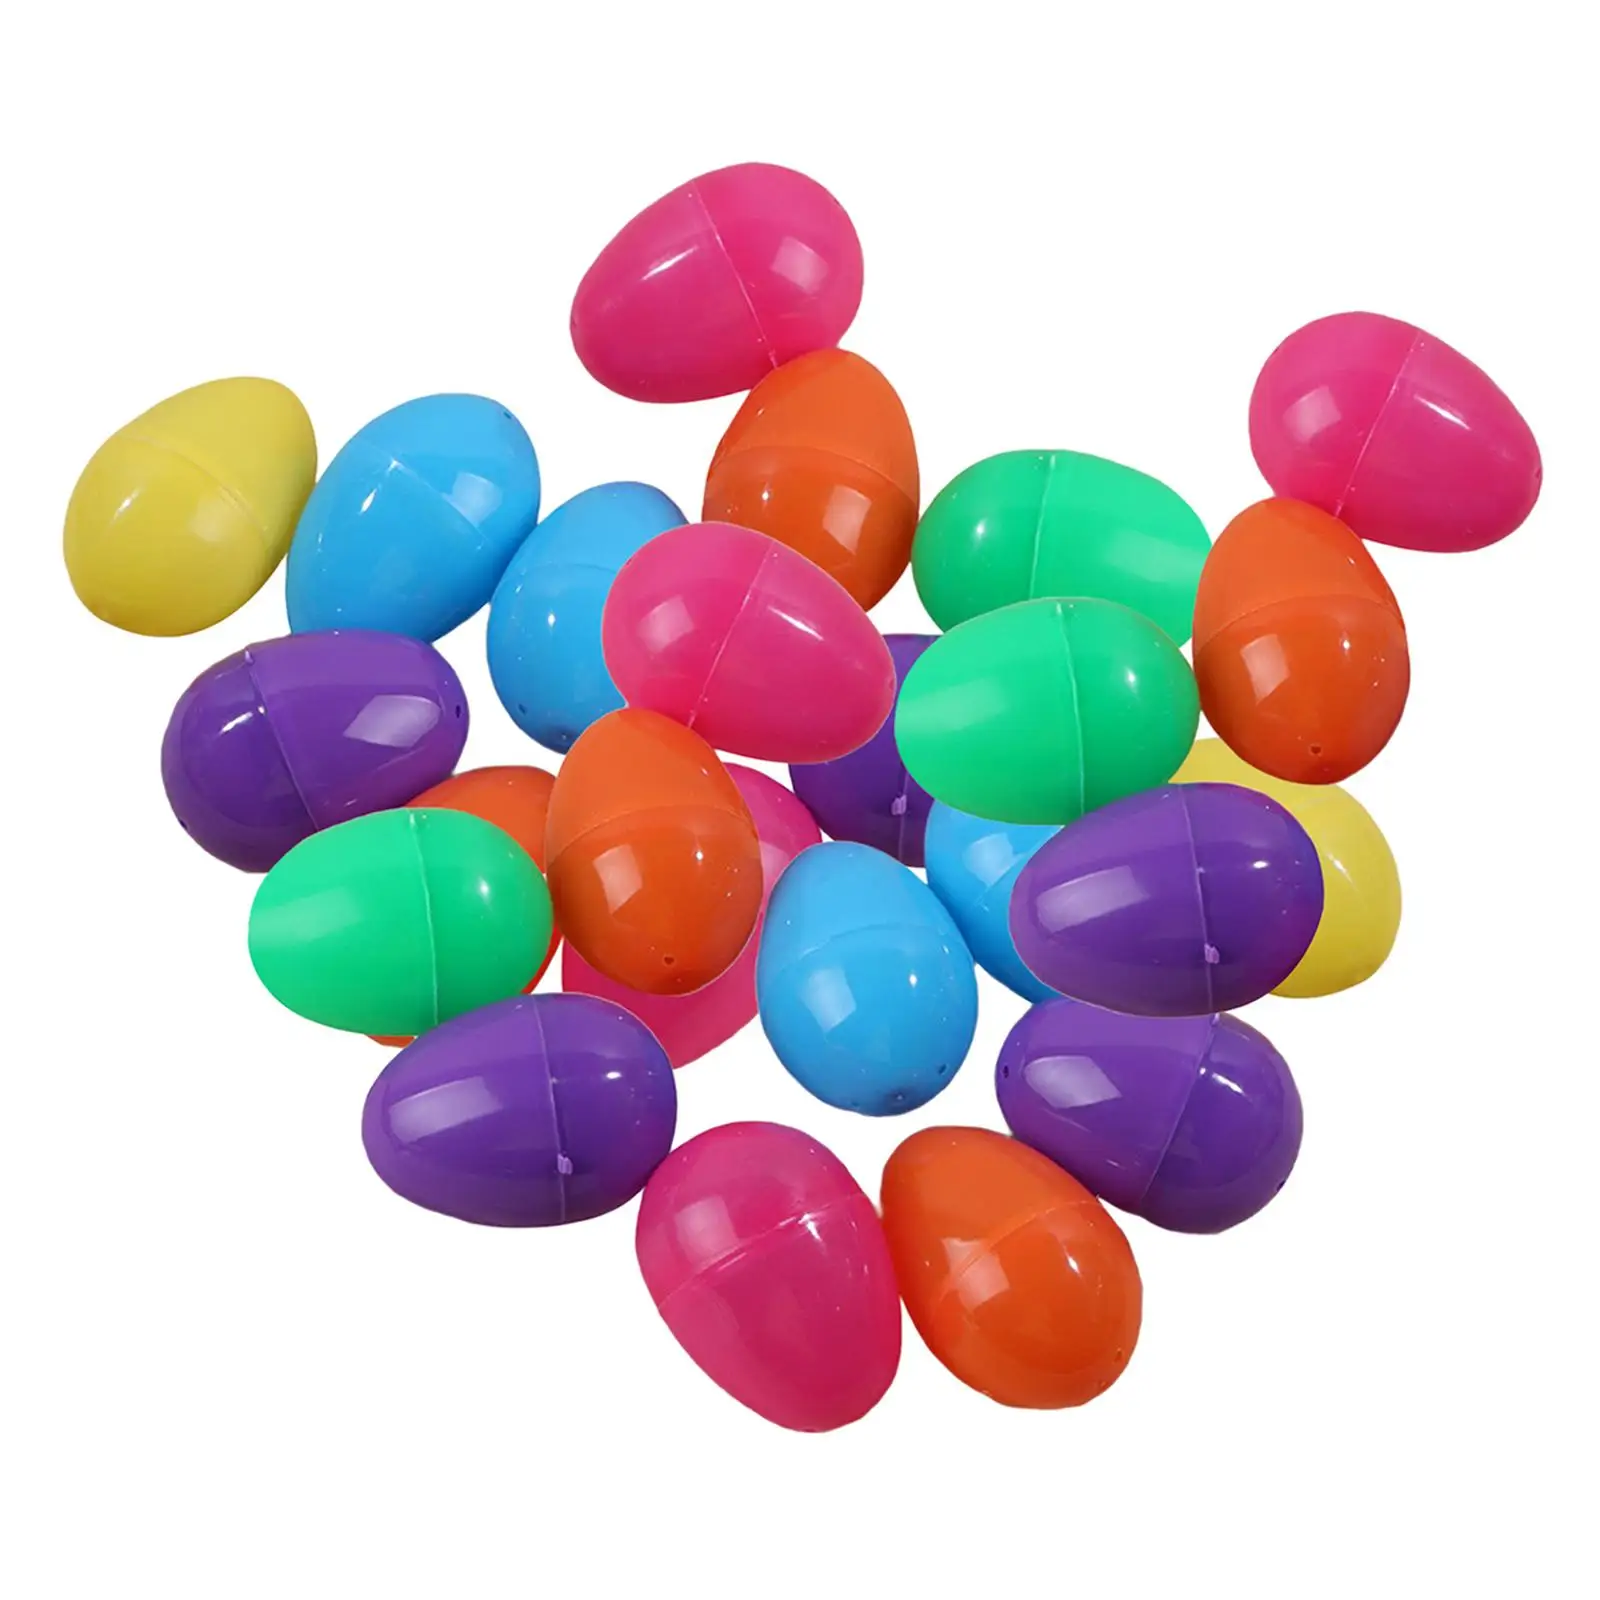 24 Pieces Plastic Easter Egg Multi-Color Ornaments Handmade Decorative